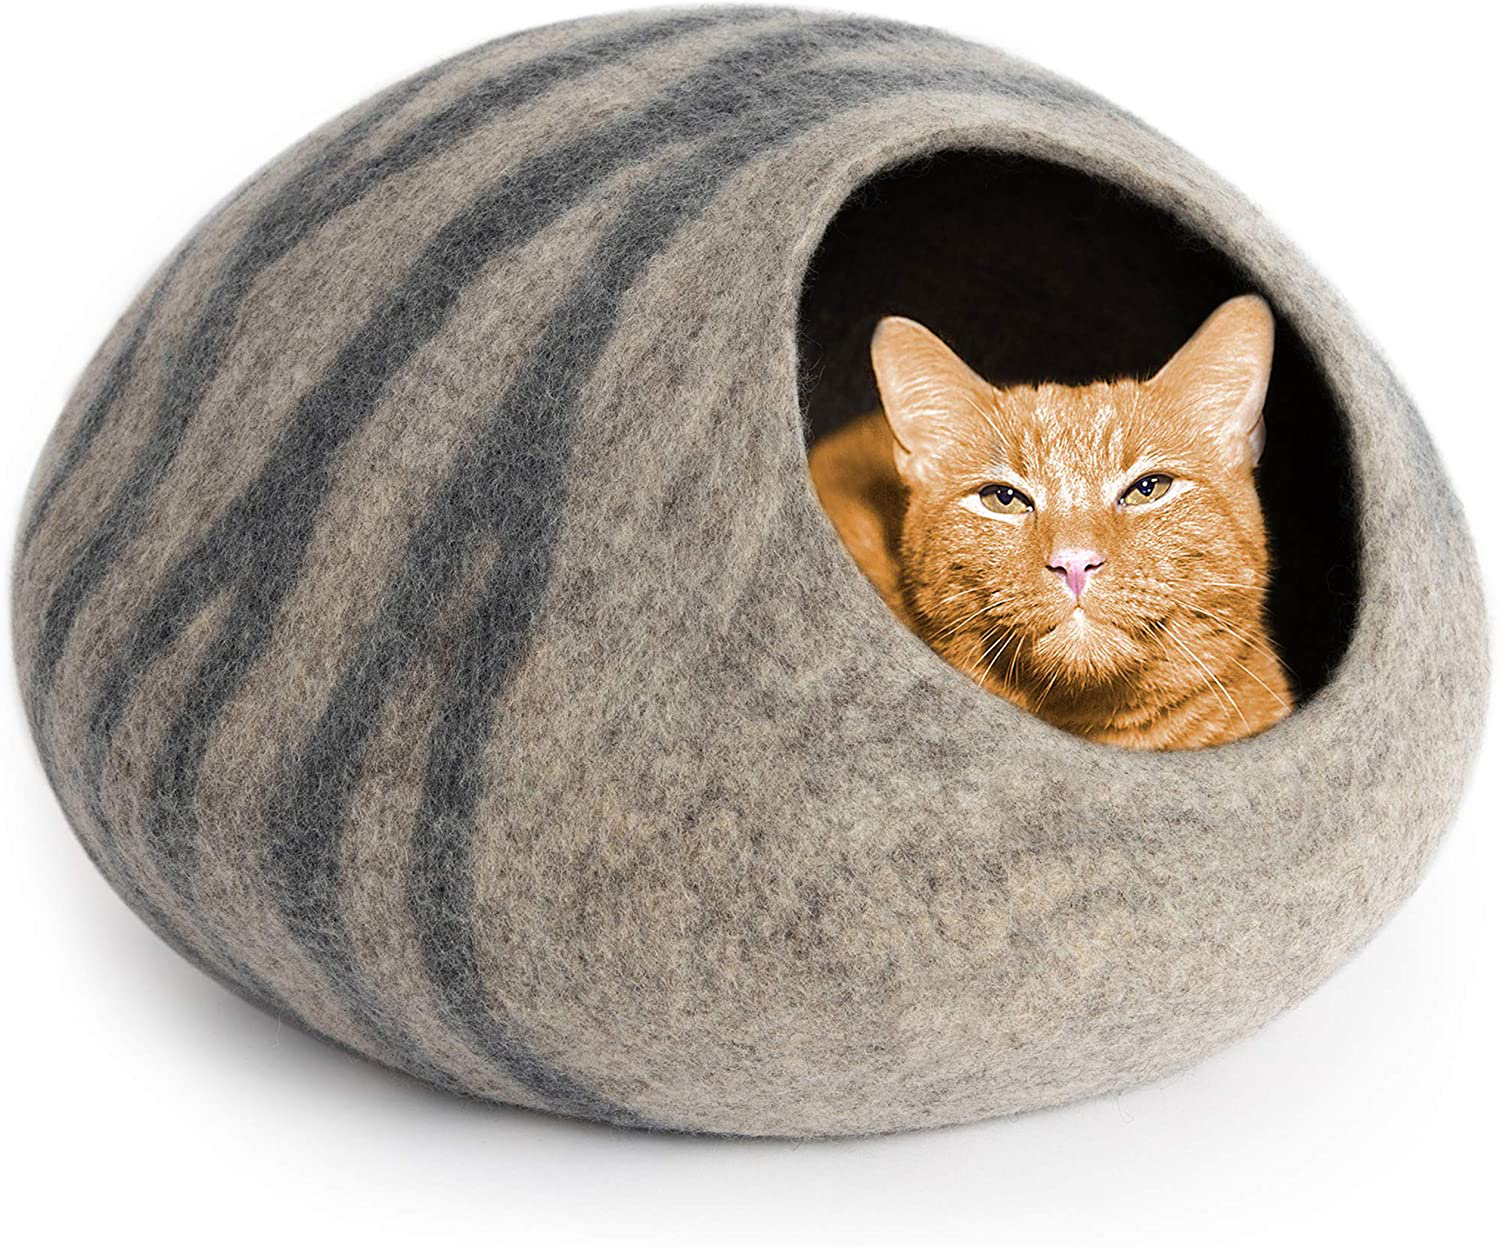 MEOWFIA Premium Felt Cat Bed Cave (Medium) - Handmade 100% Merino Wool Bed for Cats and Kittens